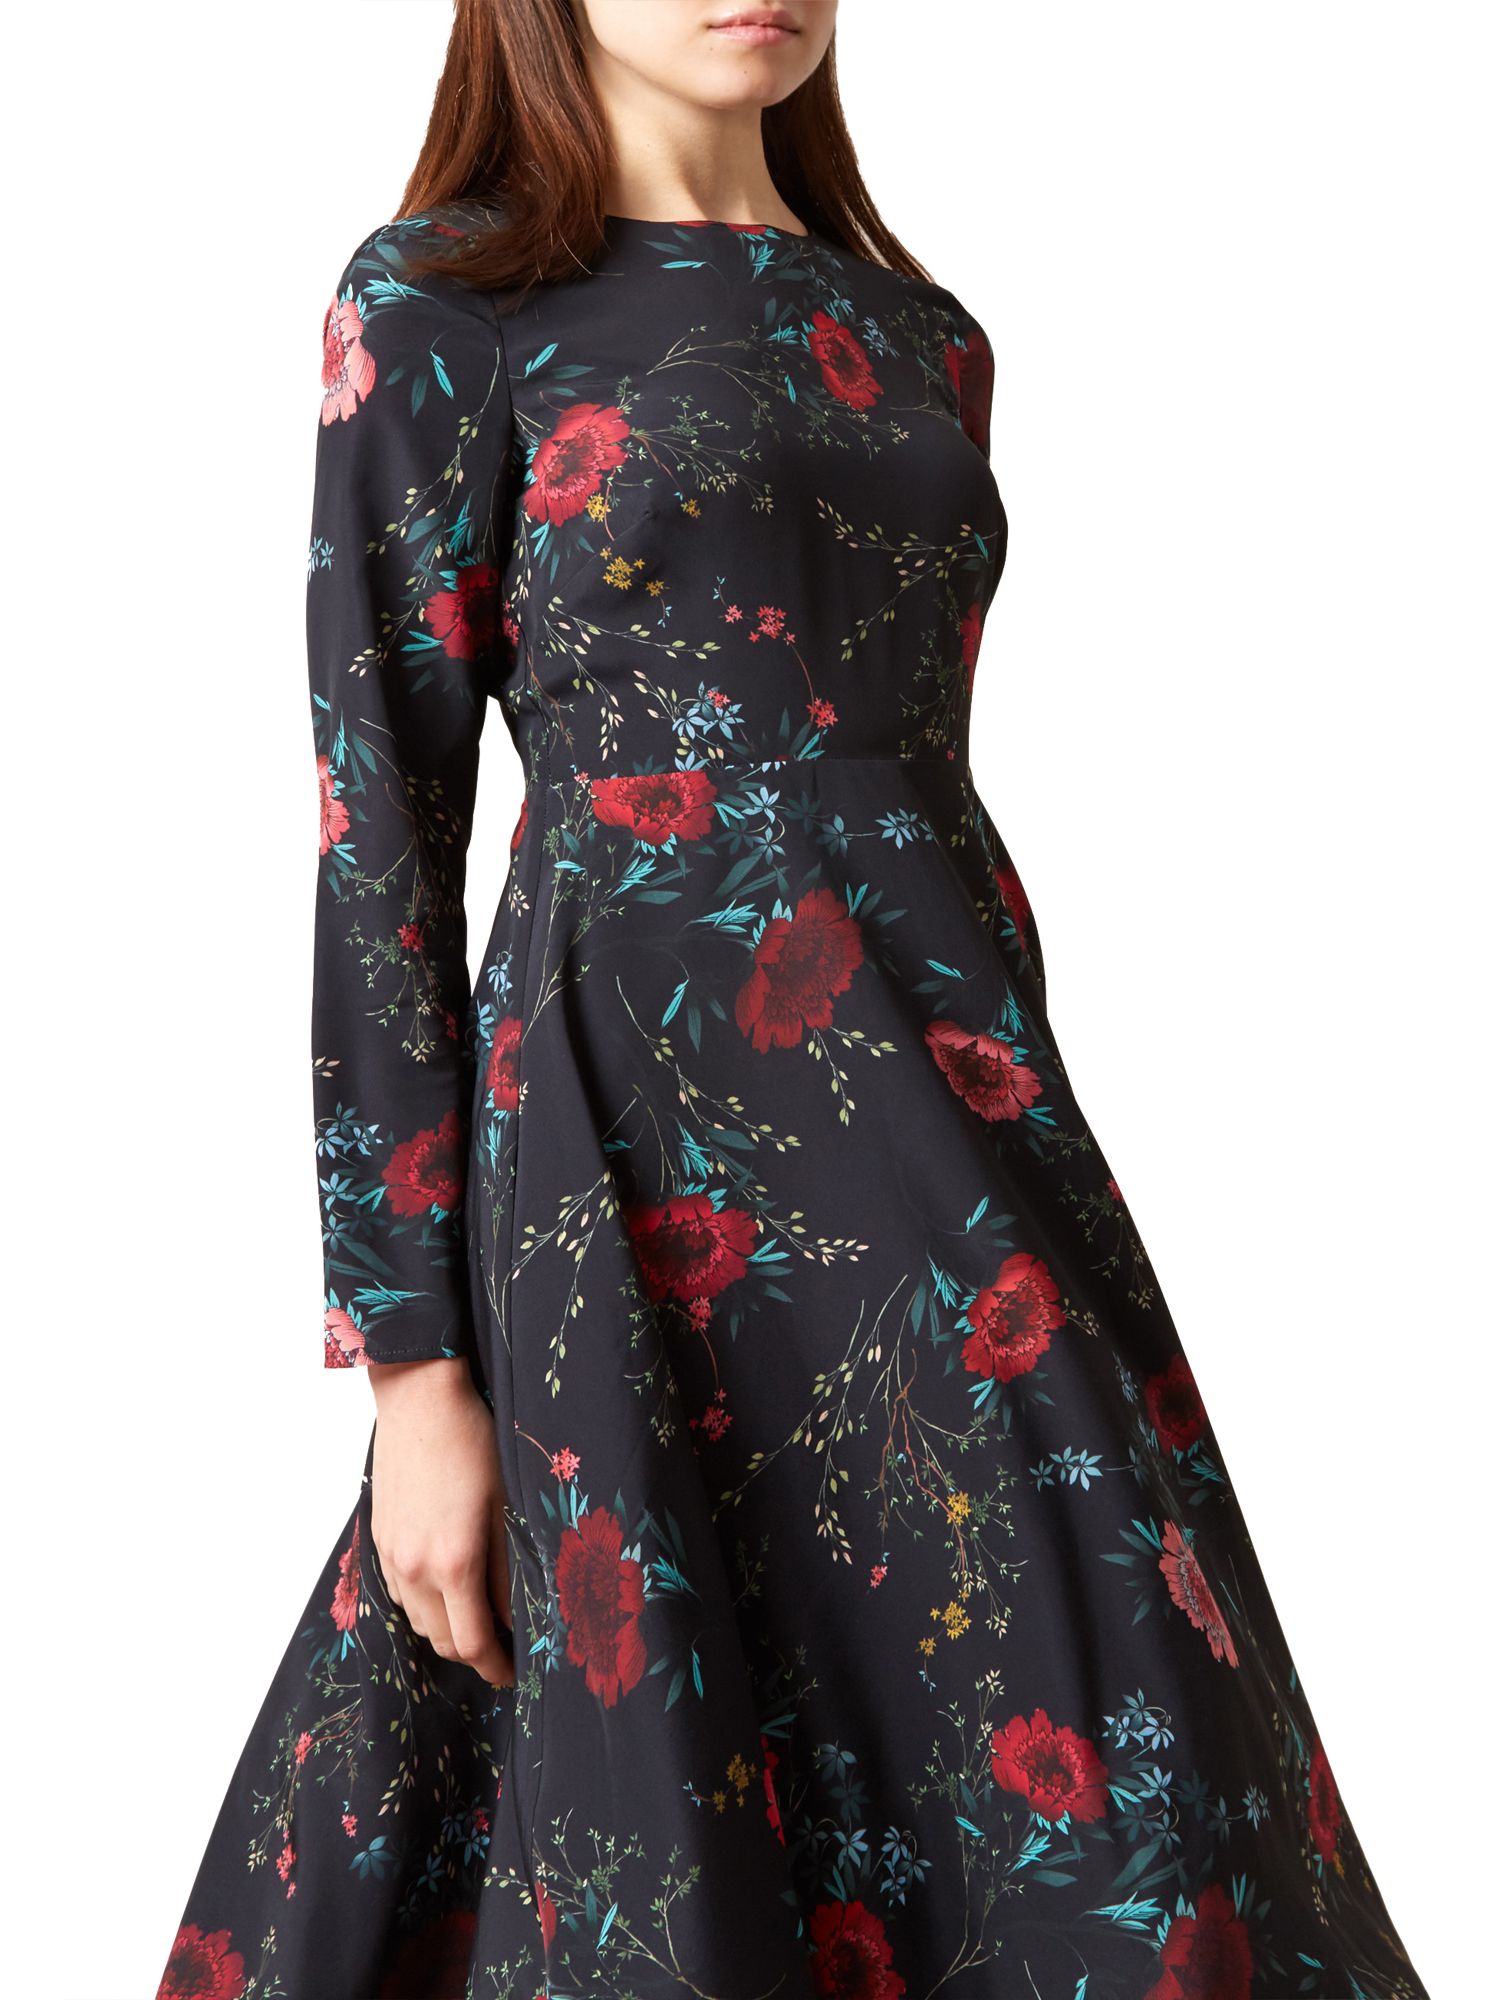 hobbs black floral dress